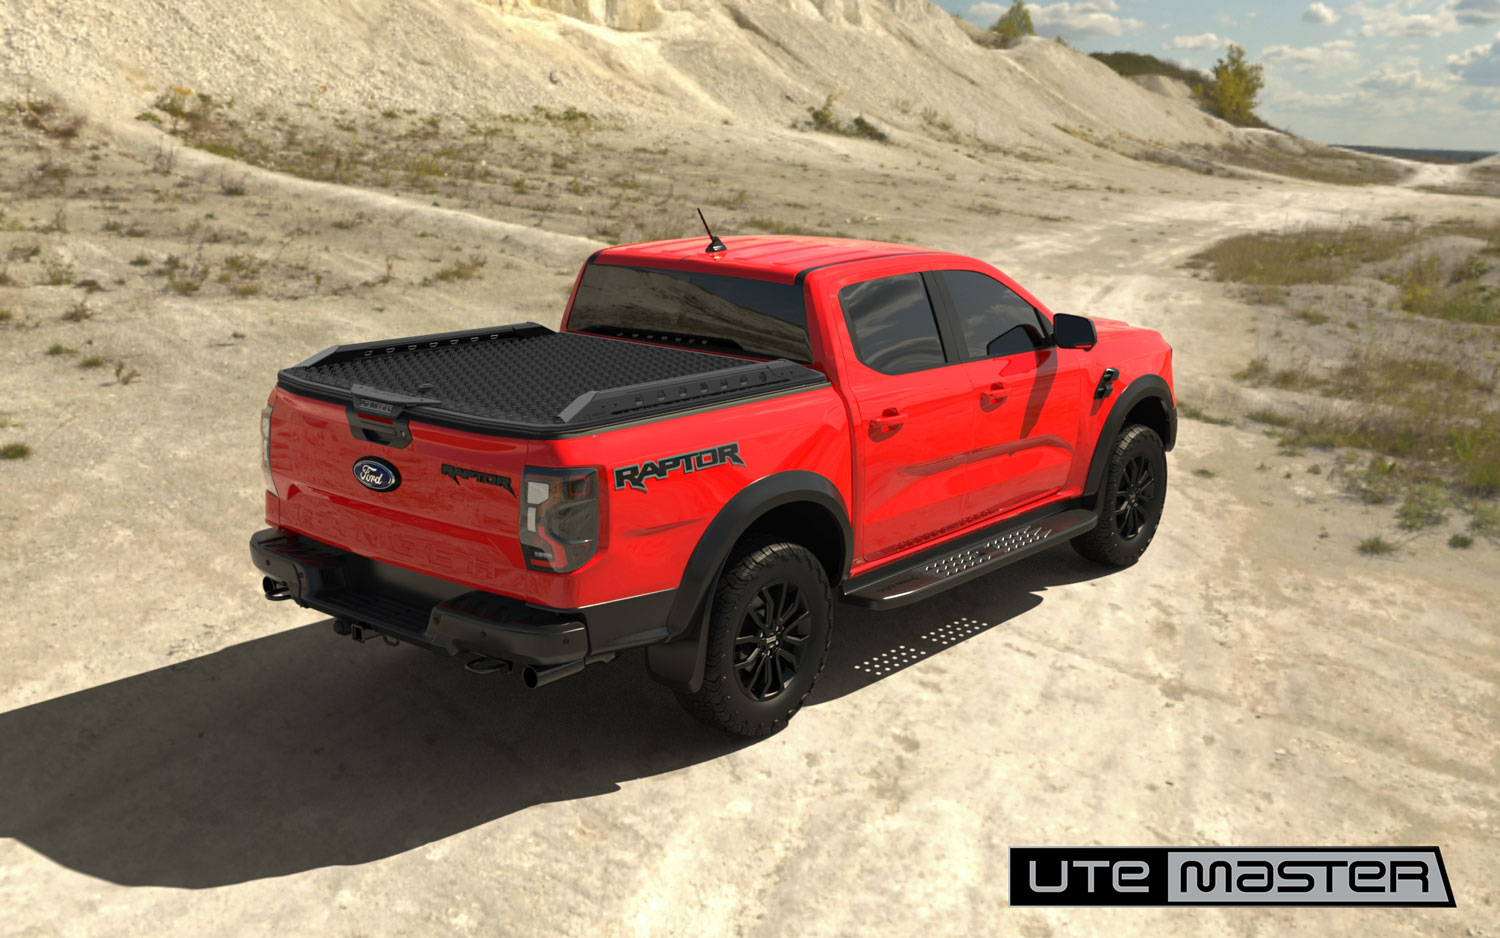 New 2022 Ford Ranger Raptor Accessories Hard Lid Load LId Utemaster Red Black Offroad Best Tough